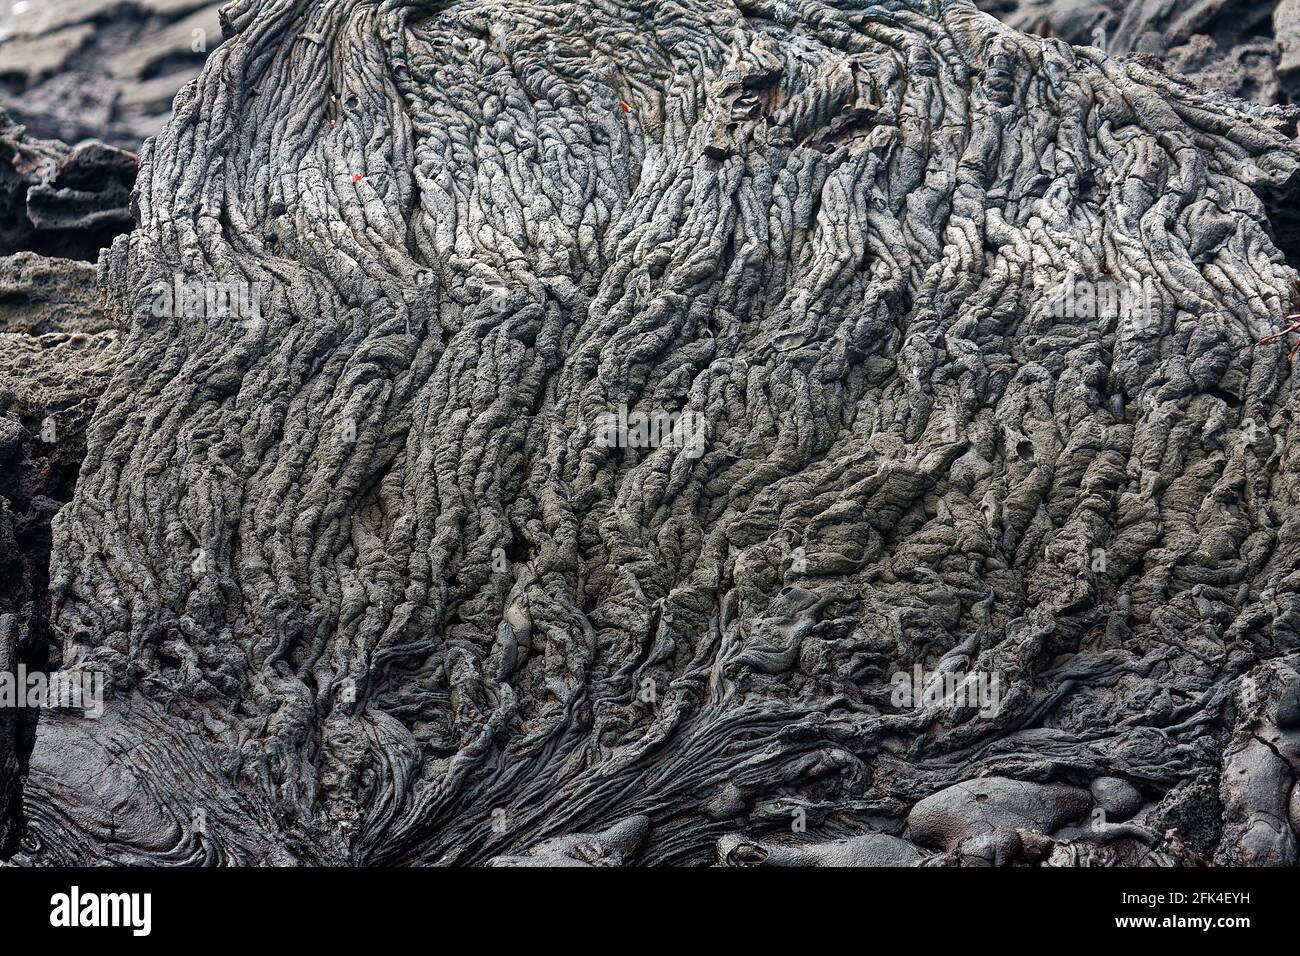 ropey pahoehoe lava, grey shades, volcanic flow, basalt, nature, South America, Galapagos Islands; Santiago Island, Ecuador Stock Photo